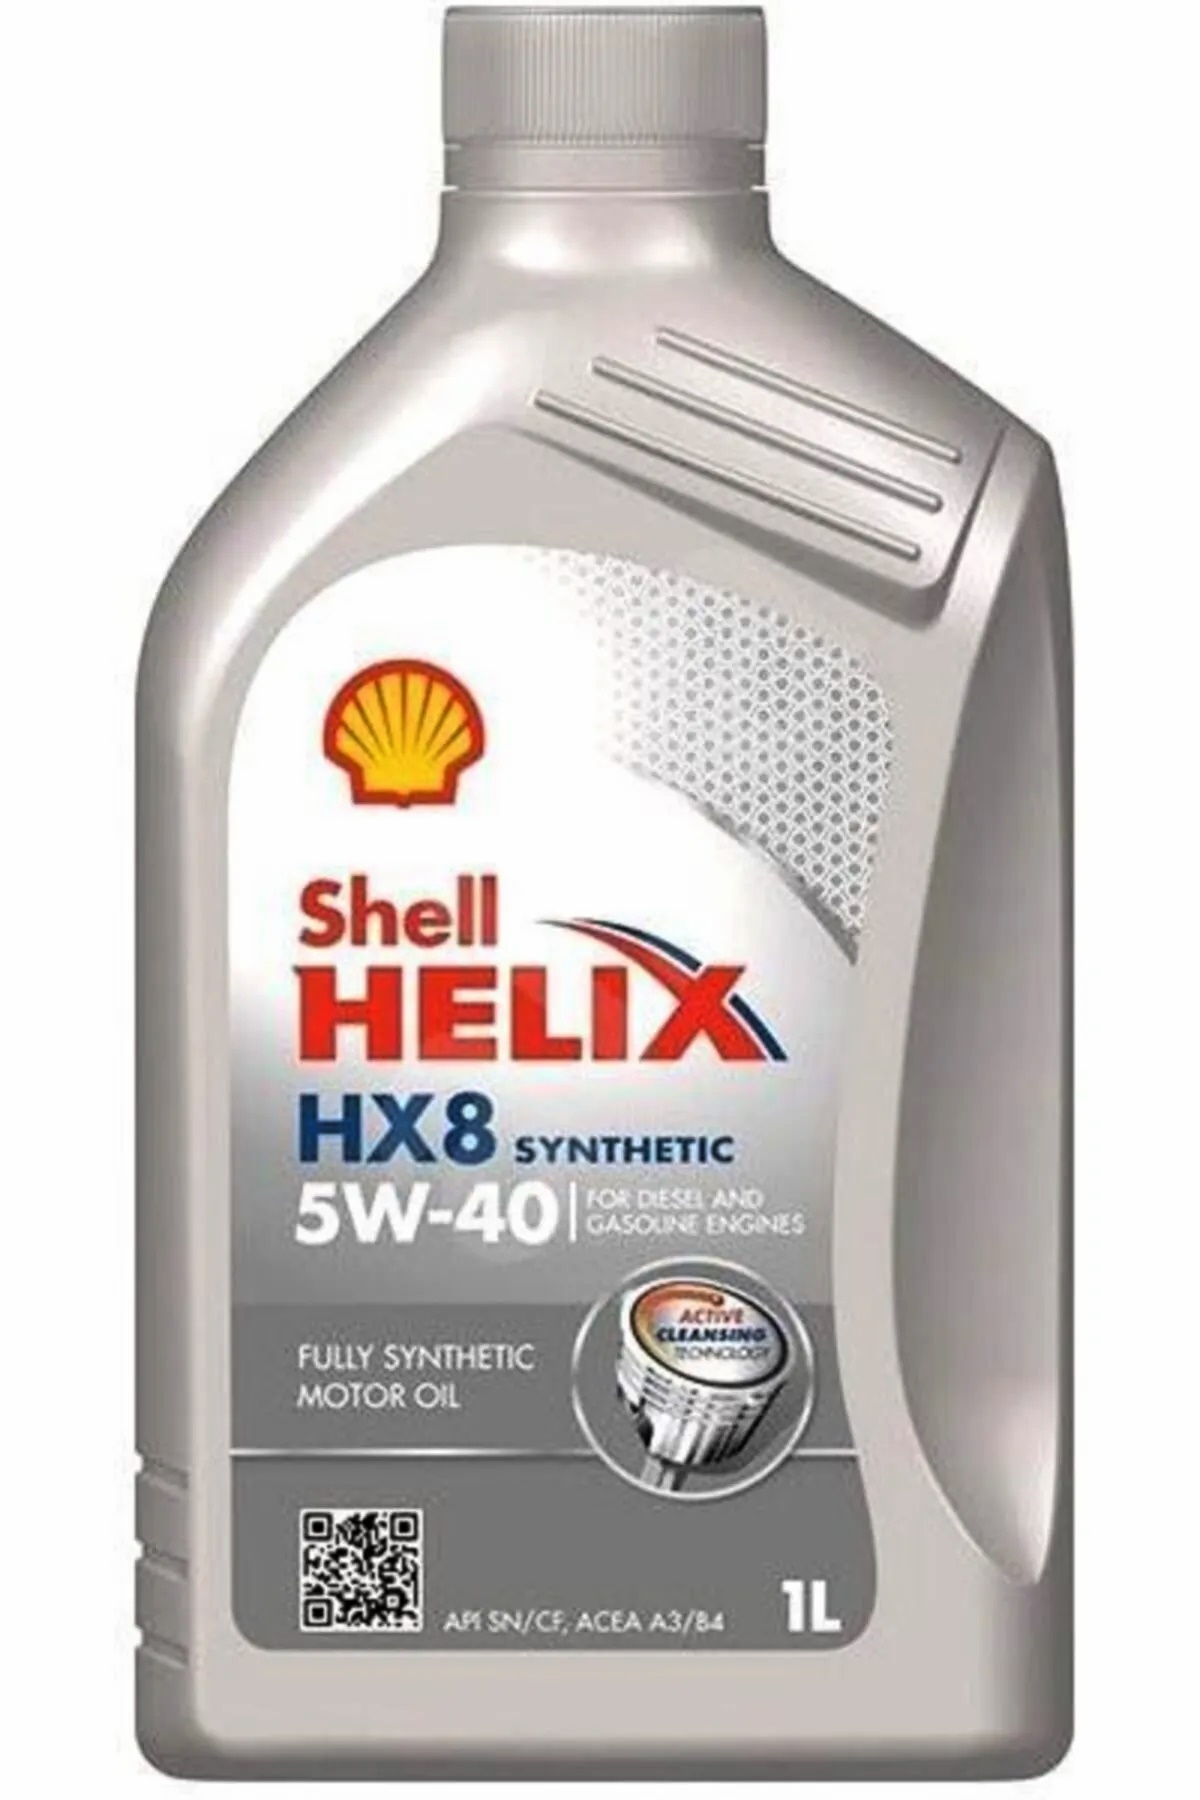 Shell Helix Hx8 Synthetic 5w-40 Motor Yağı 1 Litre